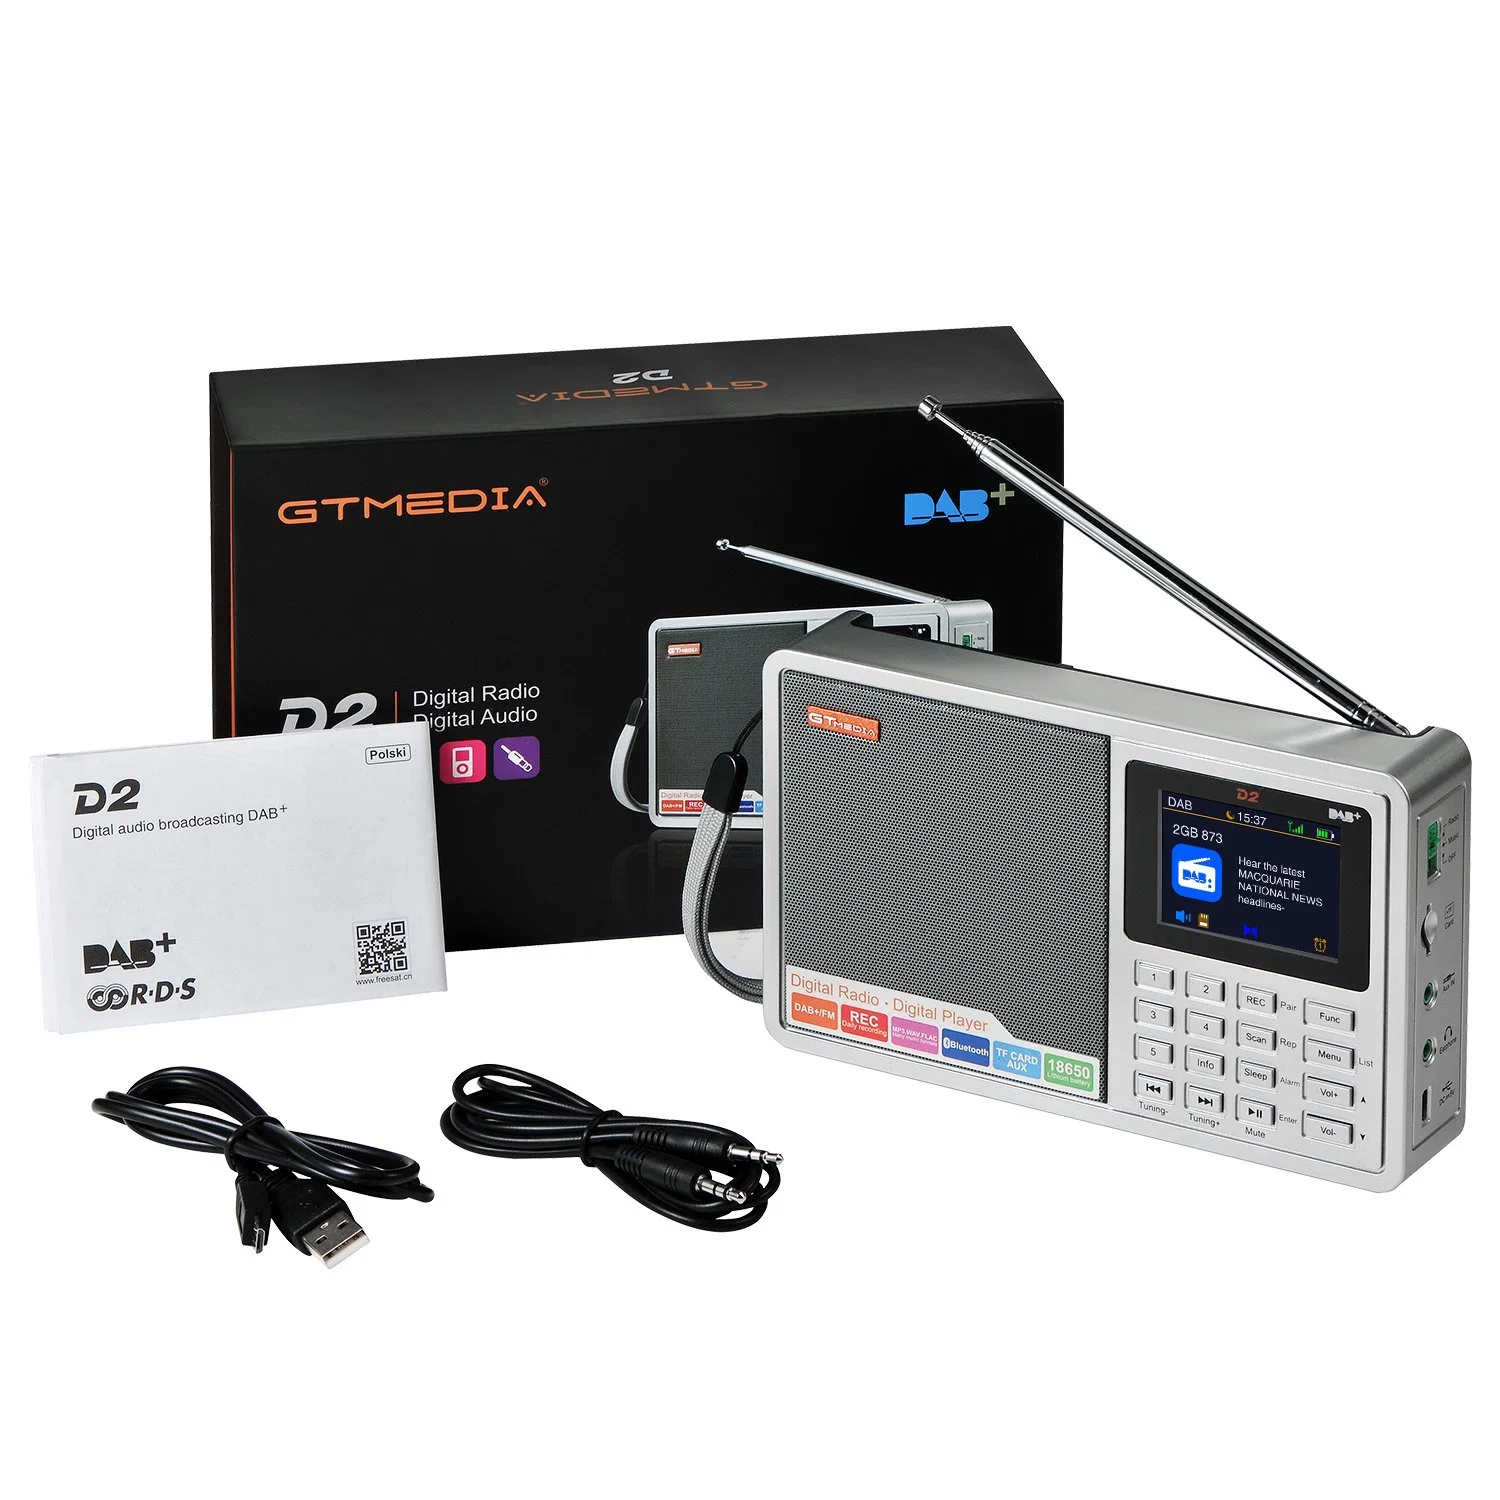 Gtmedia D2 DAB+/FM+Bt/Card/auxiliar de apoyo de Radio Digital TF tarjeta 2.4inch PANTALLA LCD